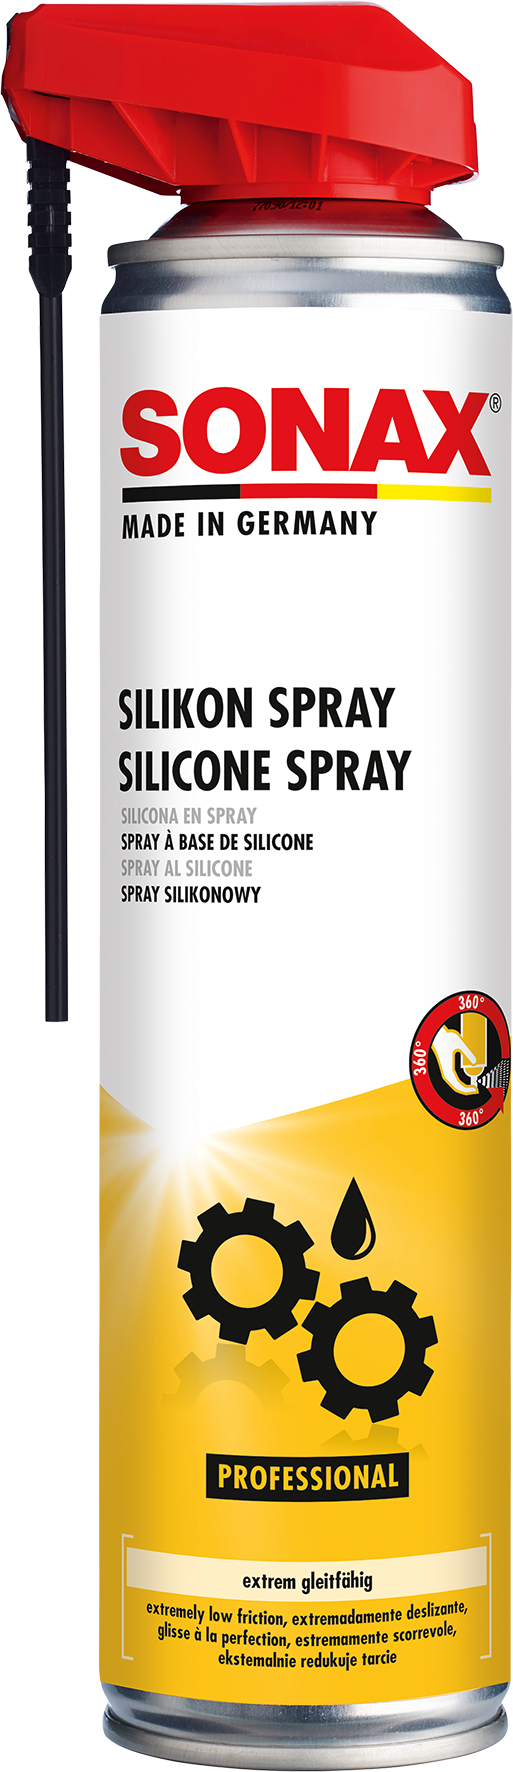 Silicone Spray With Easy Spray- Silicone Phun Với Đầu Phun Đa Dụng